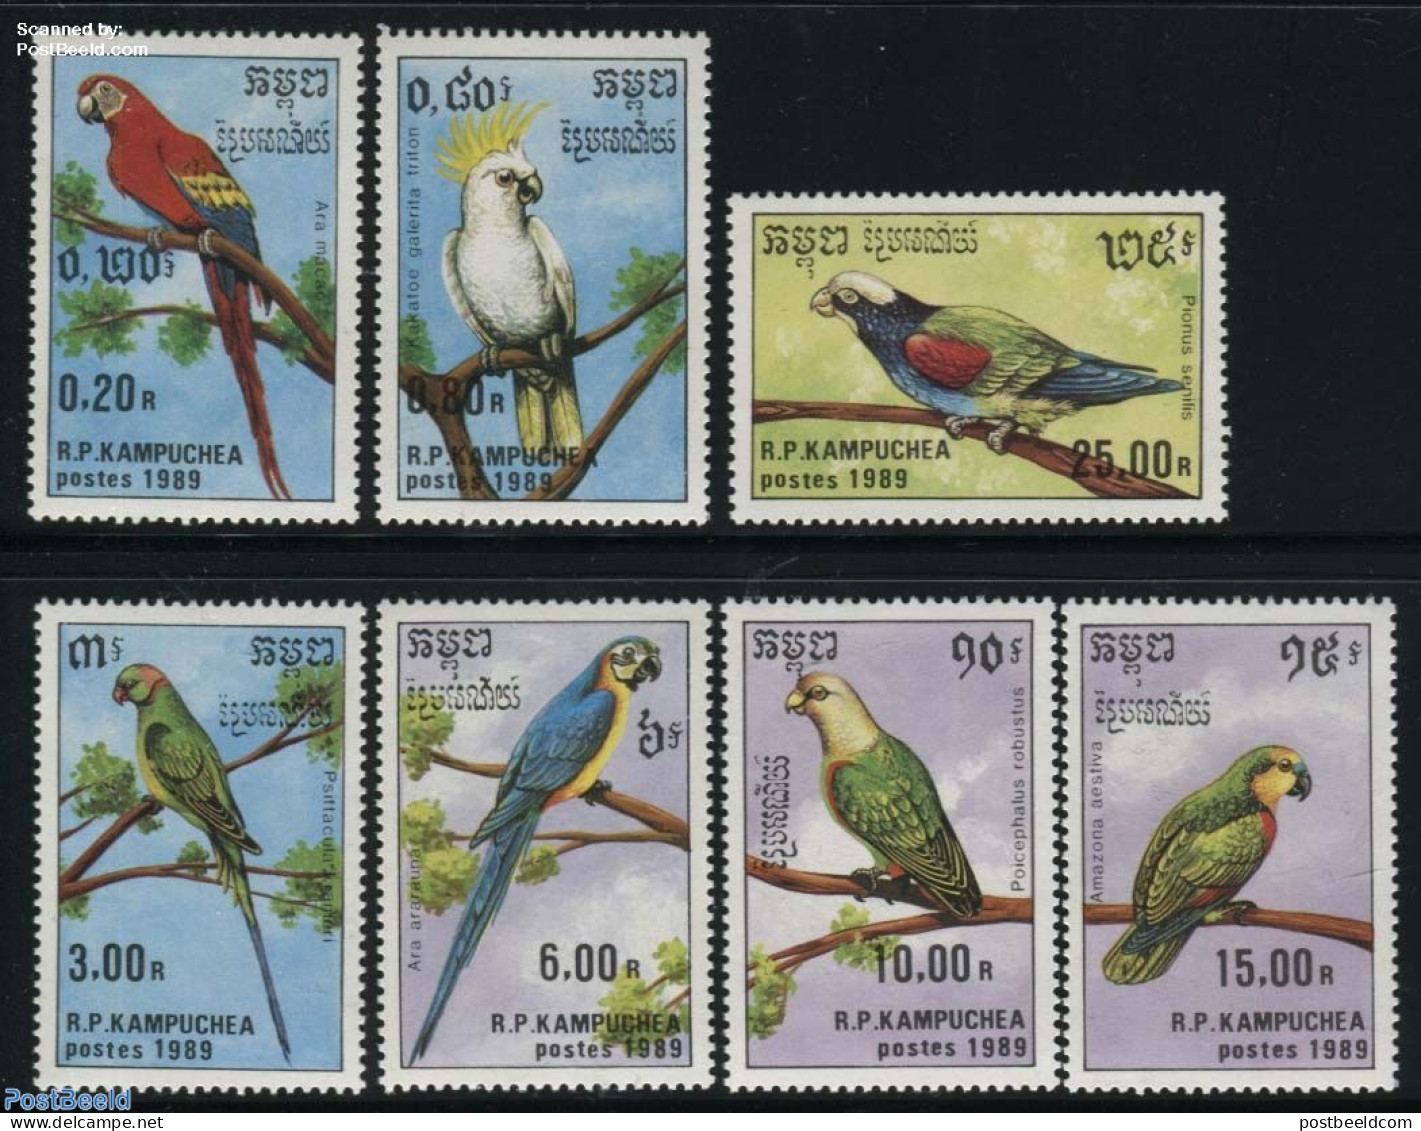 Cambodia 1989 Parrots 7v, Mint NH, Nature - Birds - Parrots - Cambodia